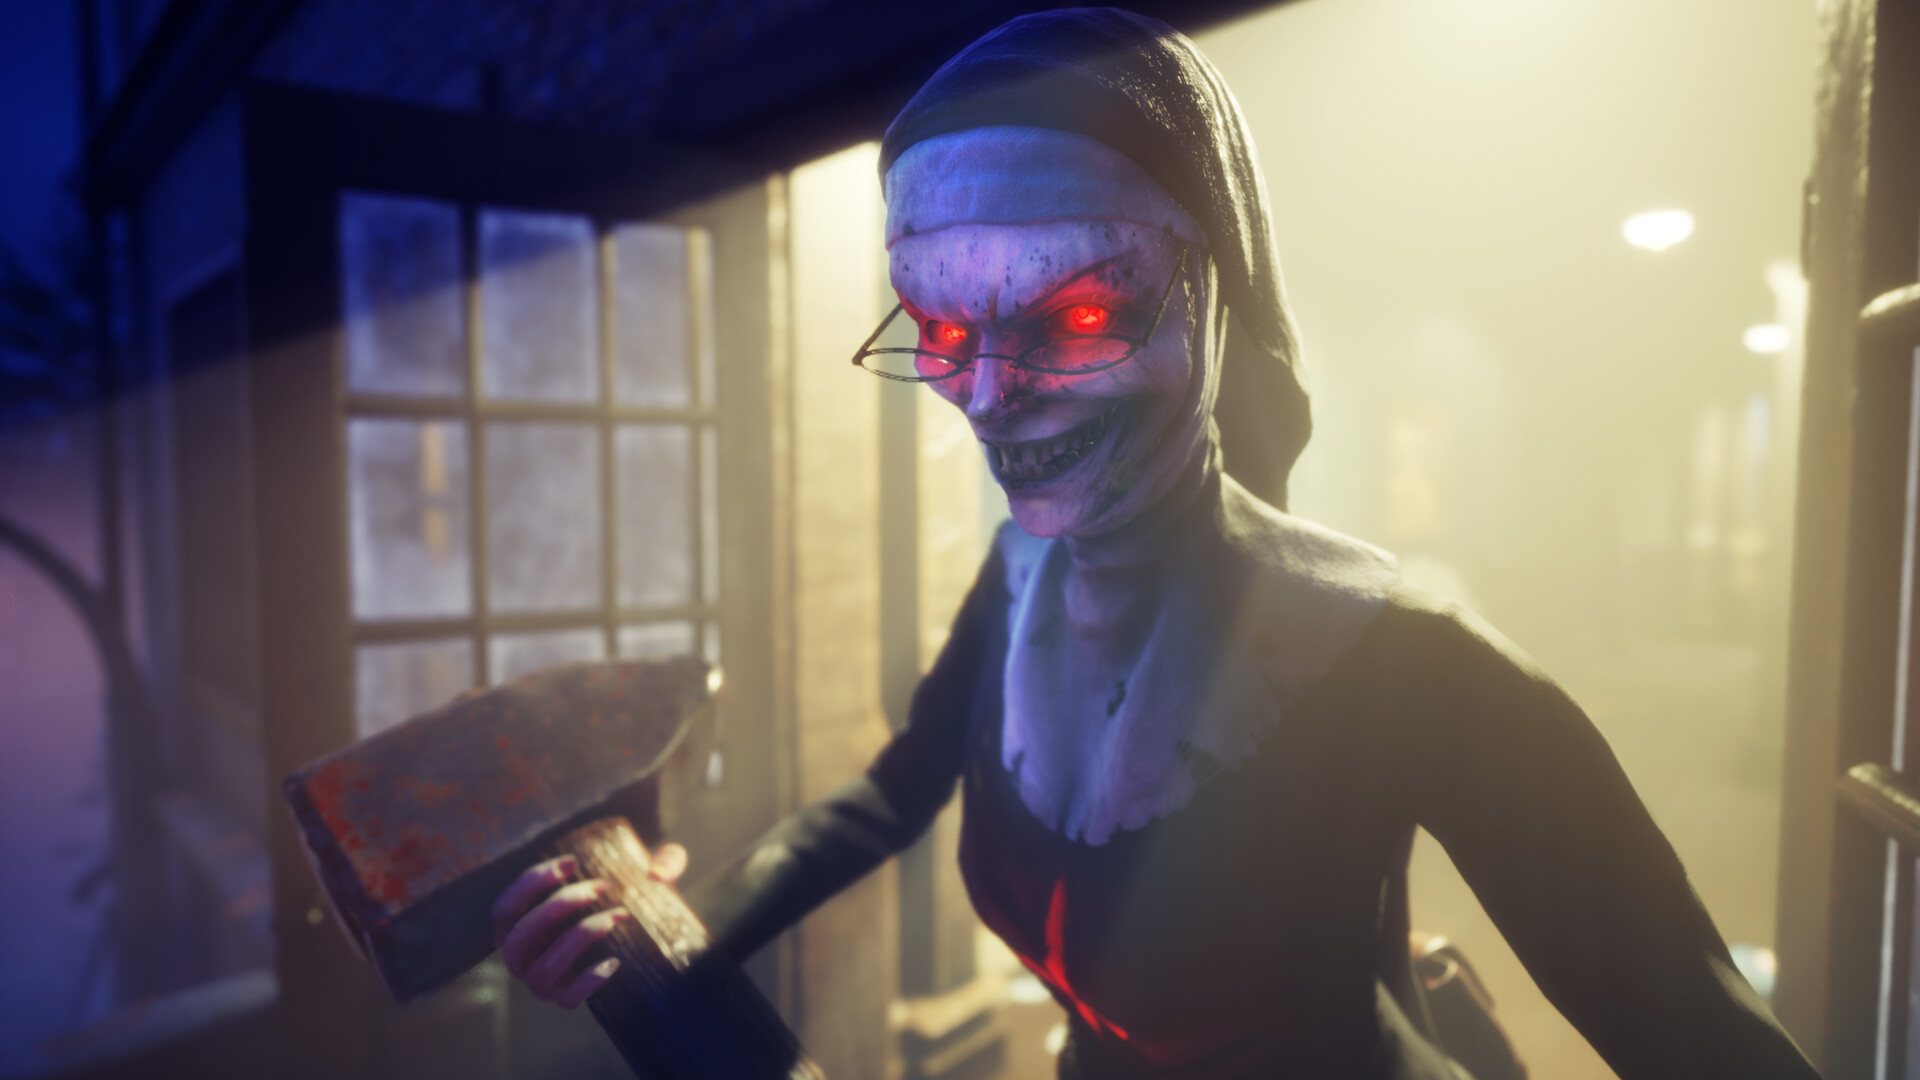 Evil Nun: The Broken Mask Free Download